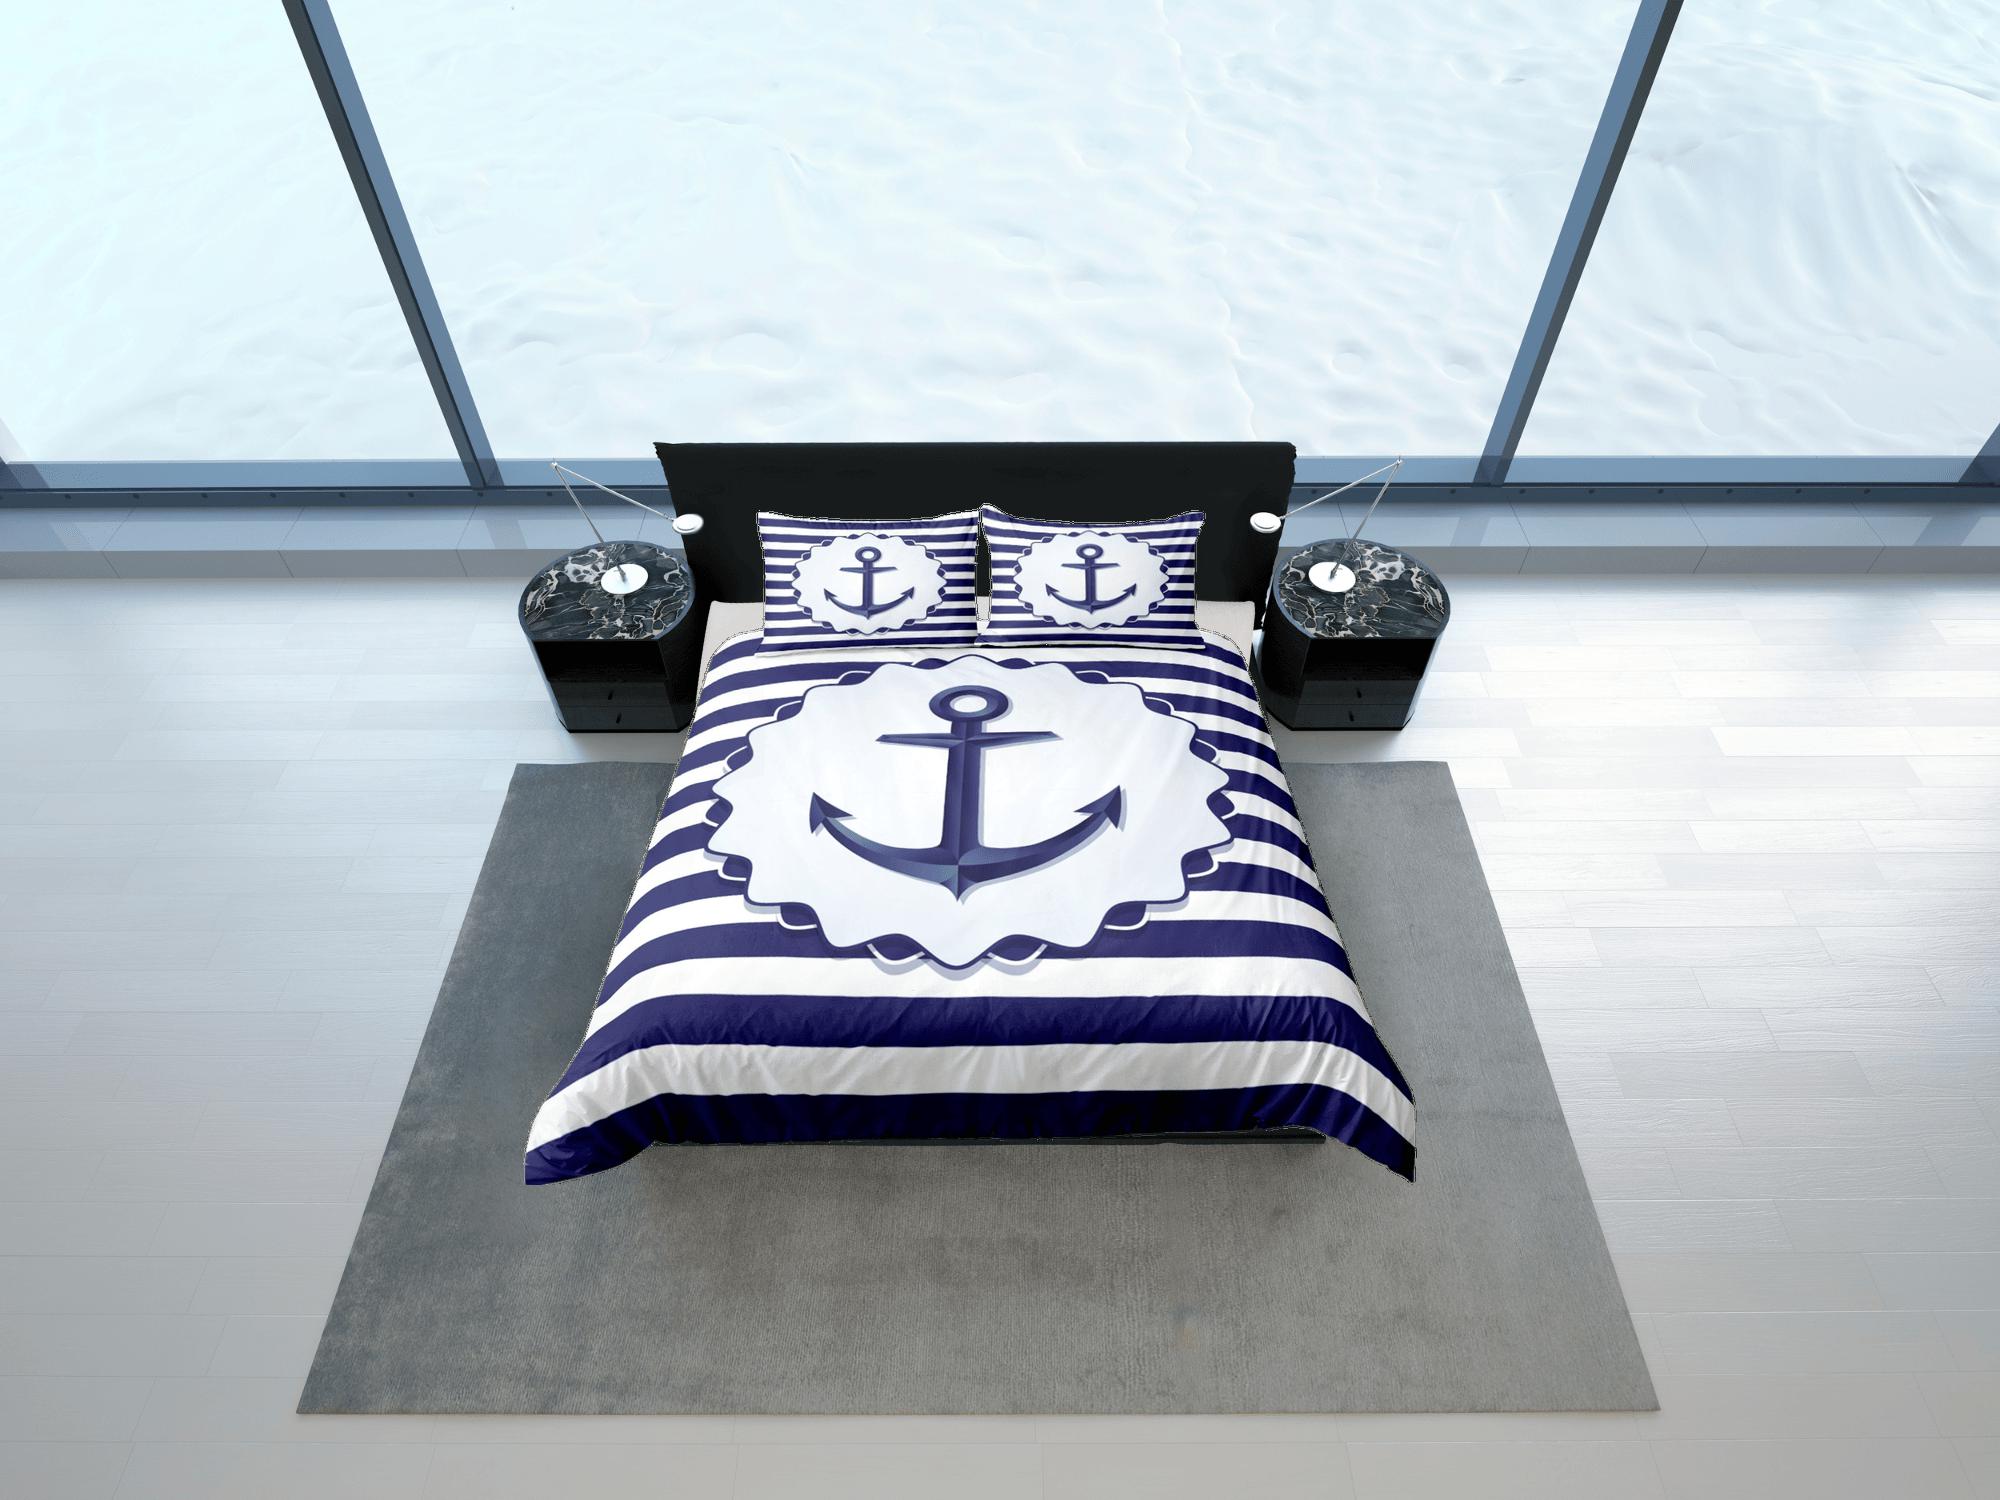 daintyduvet Anchor in blue stripe nautical duvet cover coastal grandma bedding set full queen king, aesthetic beach room decor, ocean lover gift seaman